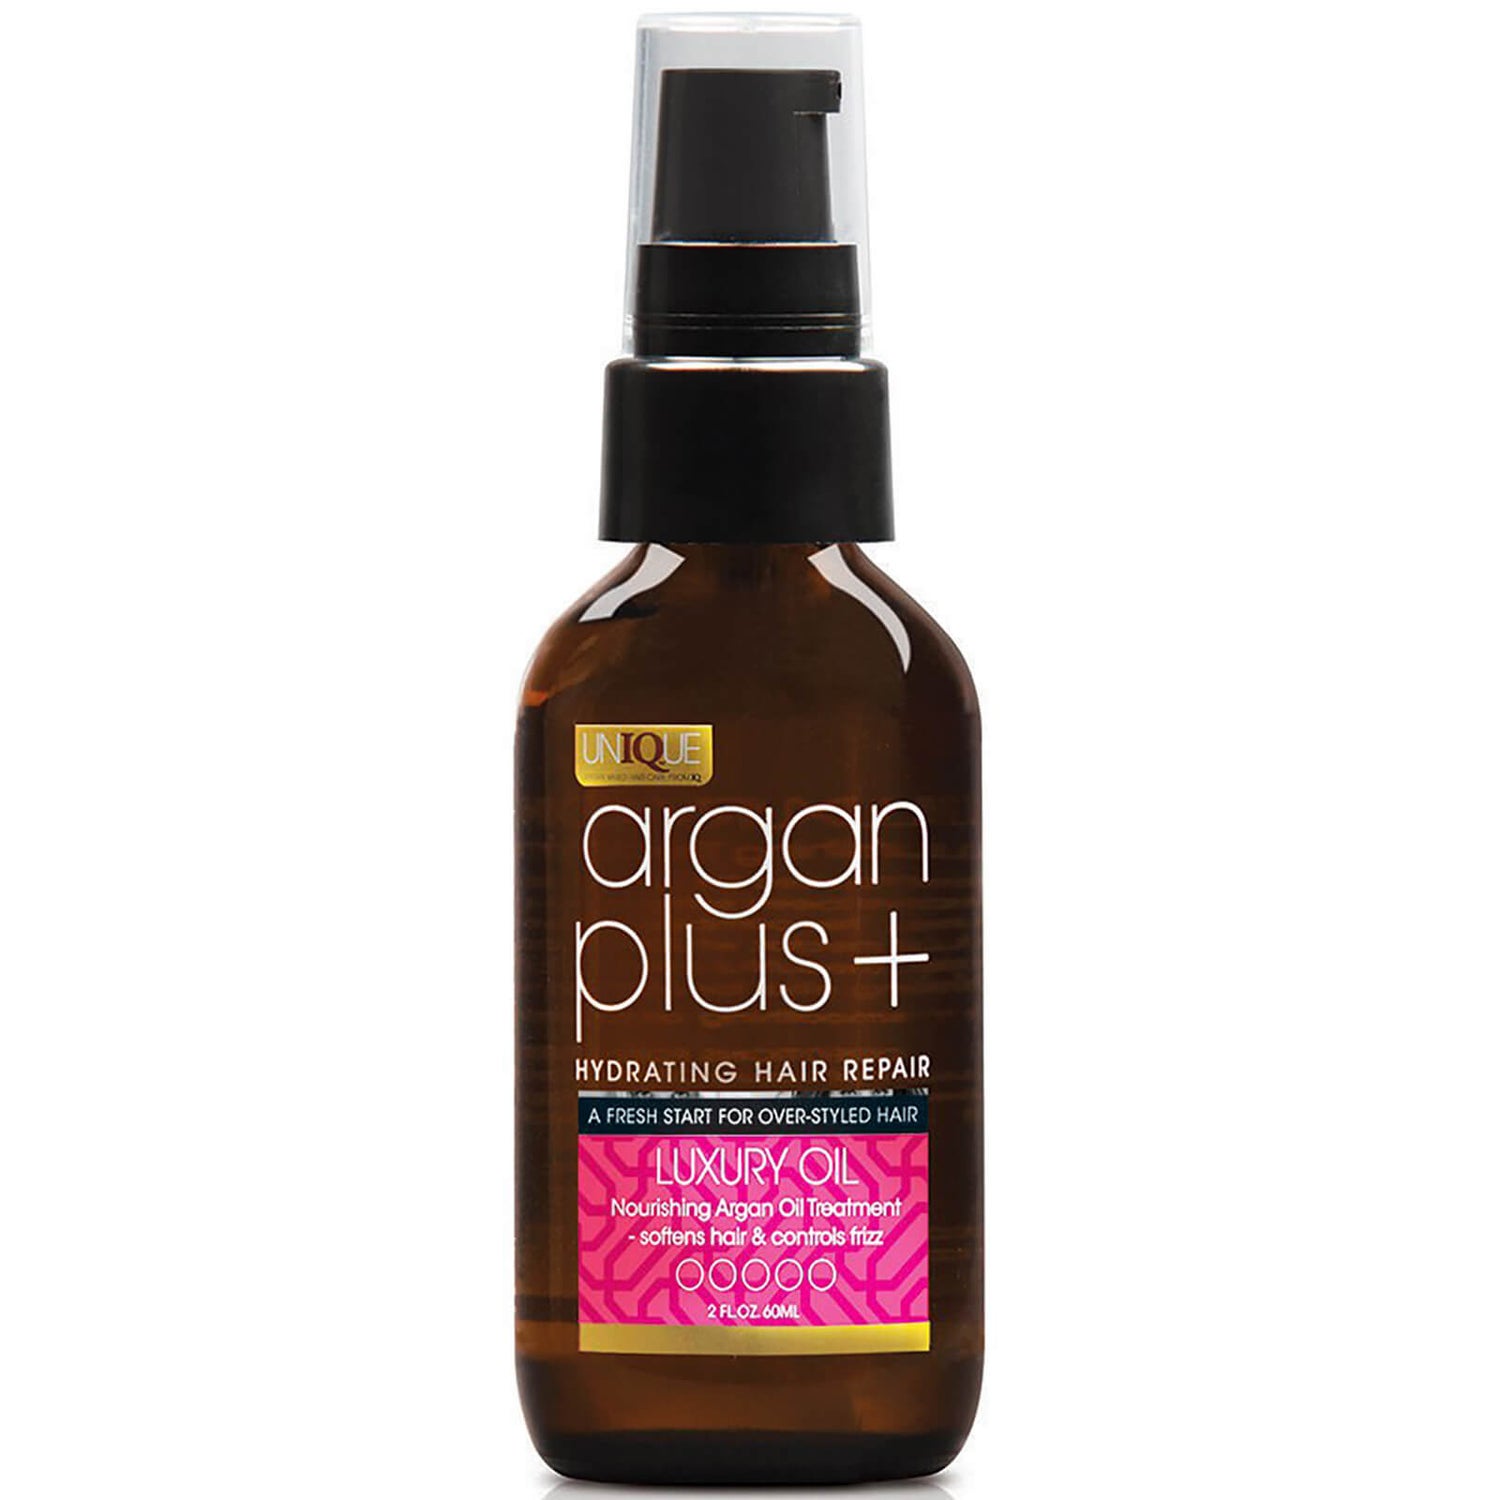 Argan Plus+ Luxury Oil Treatment 60ml